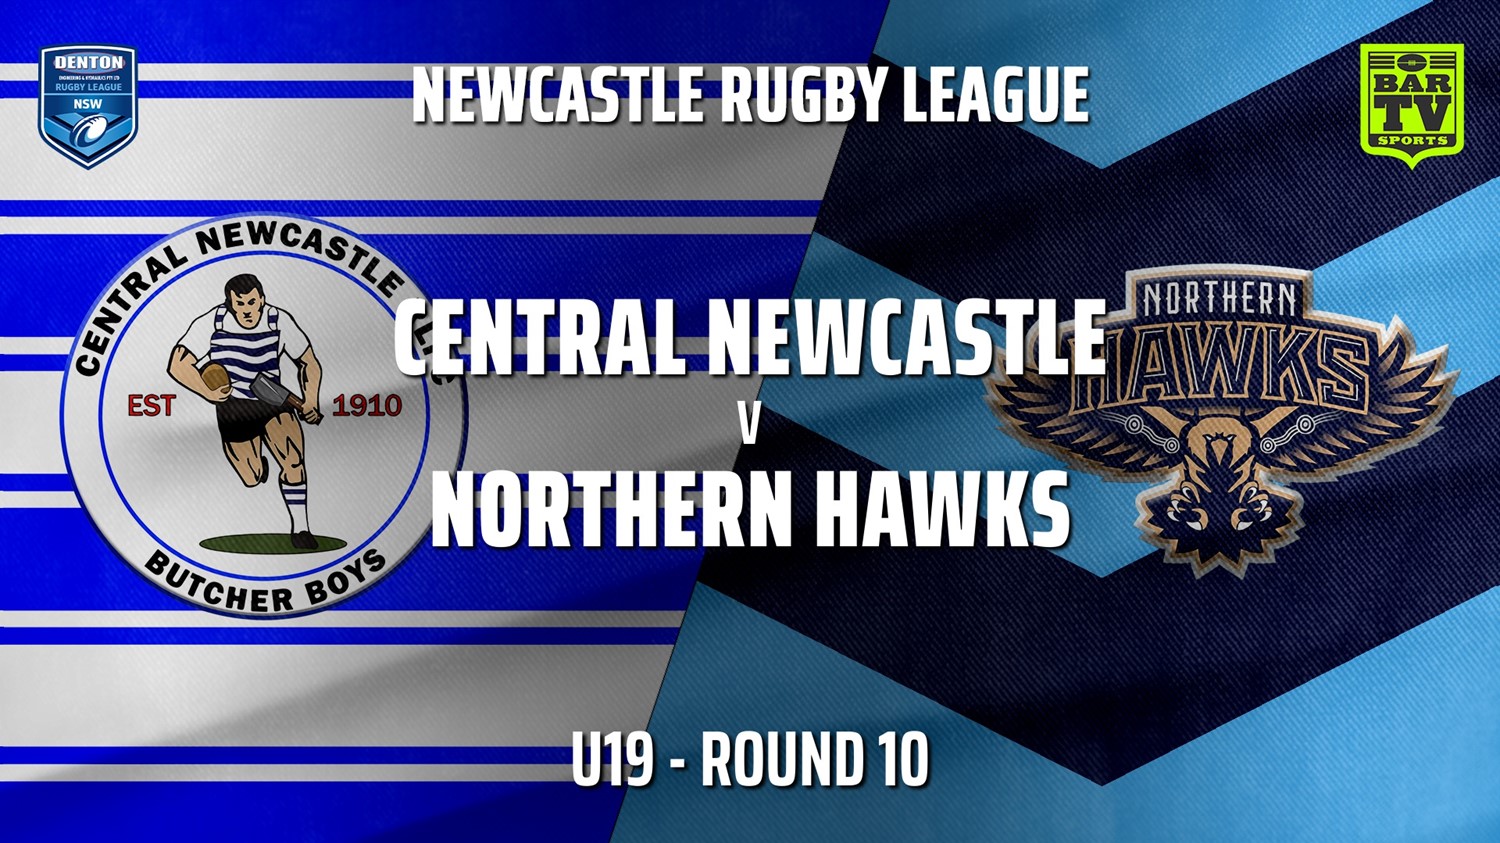 210606-Newcastle Round 10 - U19 - Central Newcastle v Northern Hawks Slate Image